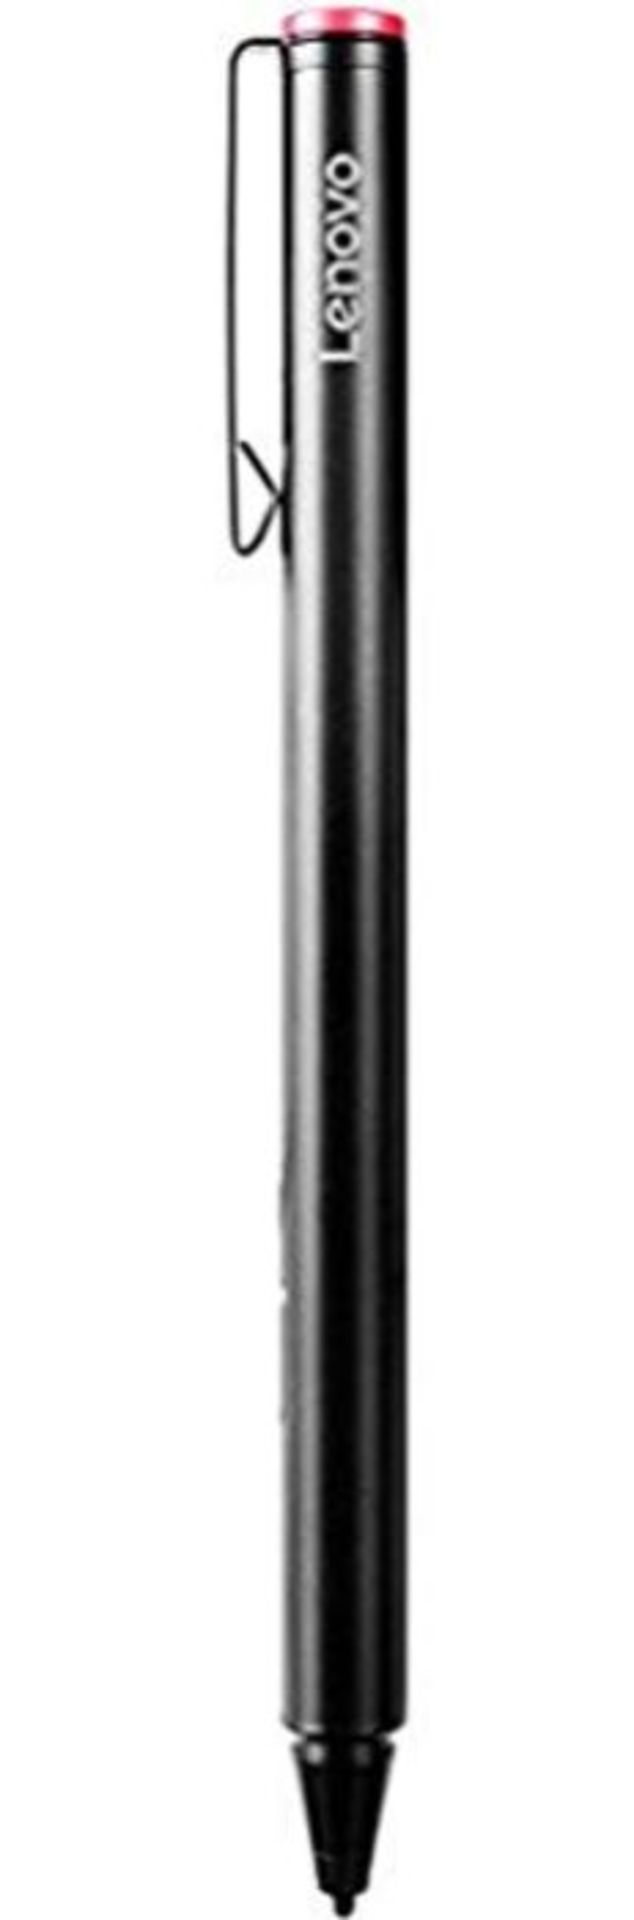 Lenovo Active Pen (GX80K32884) for Yoga (Black) (Configurable Buttons, Anti-accident C